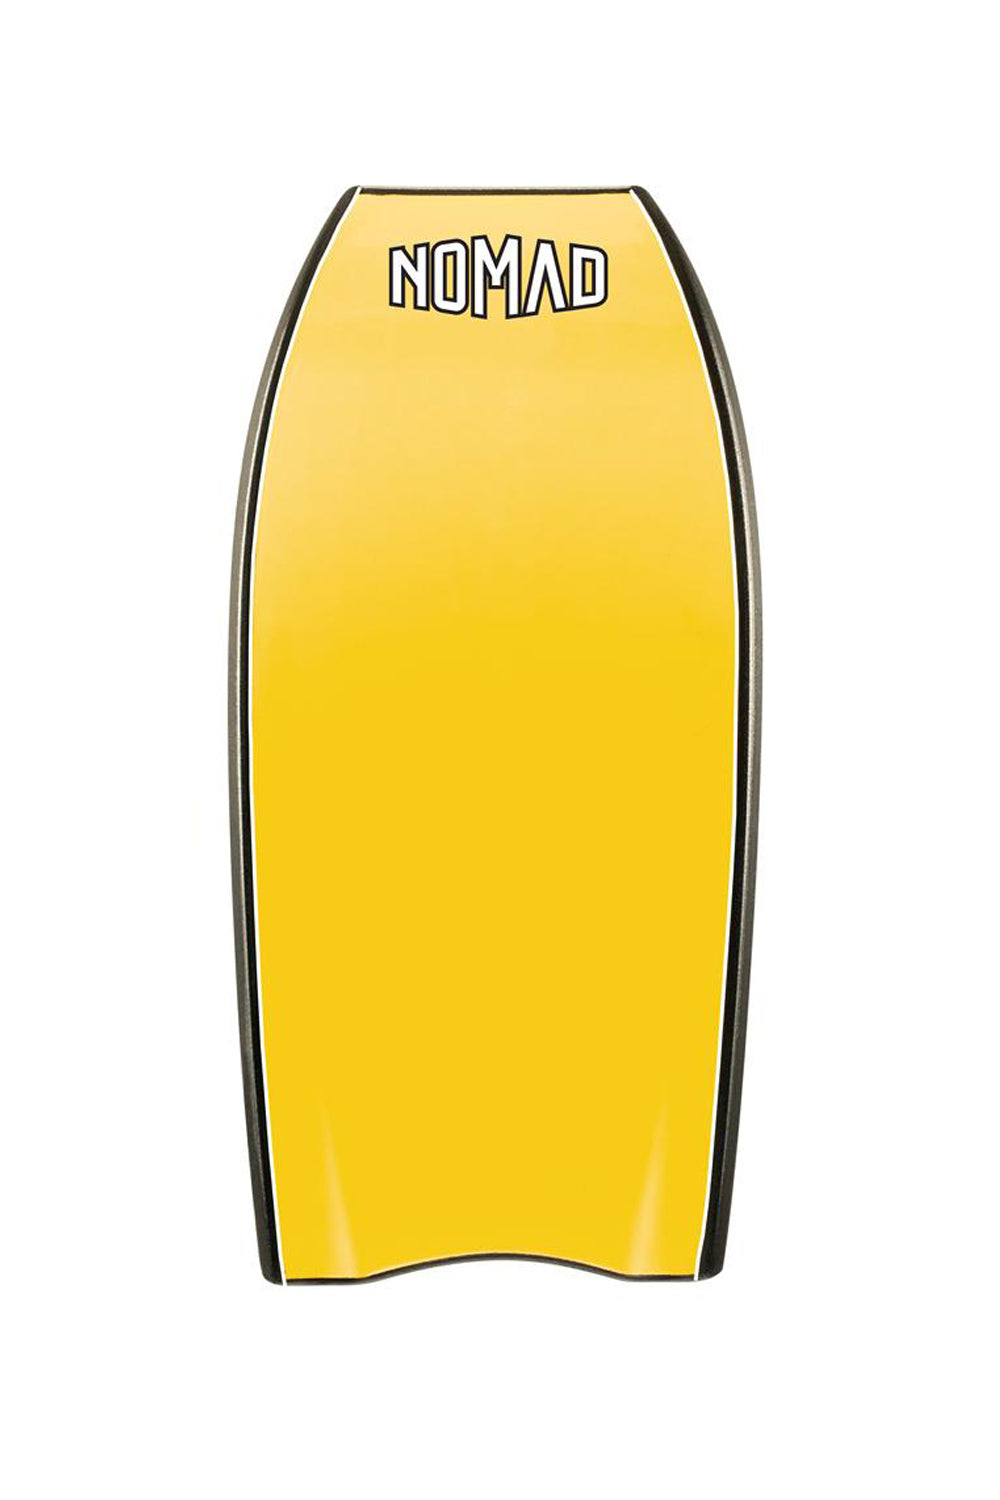 Nomad Enigma EPS XL Bodyboard